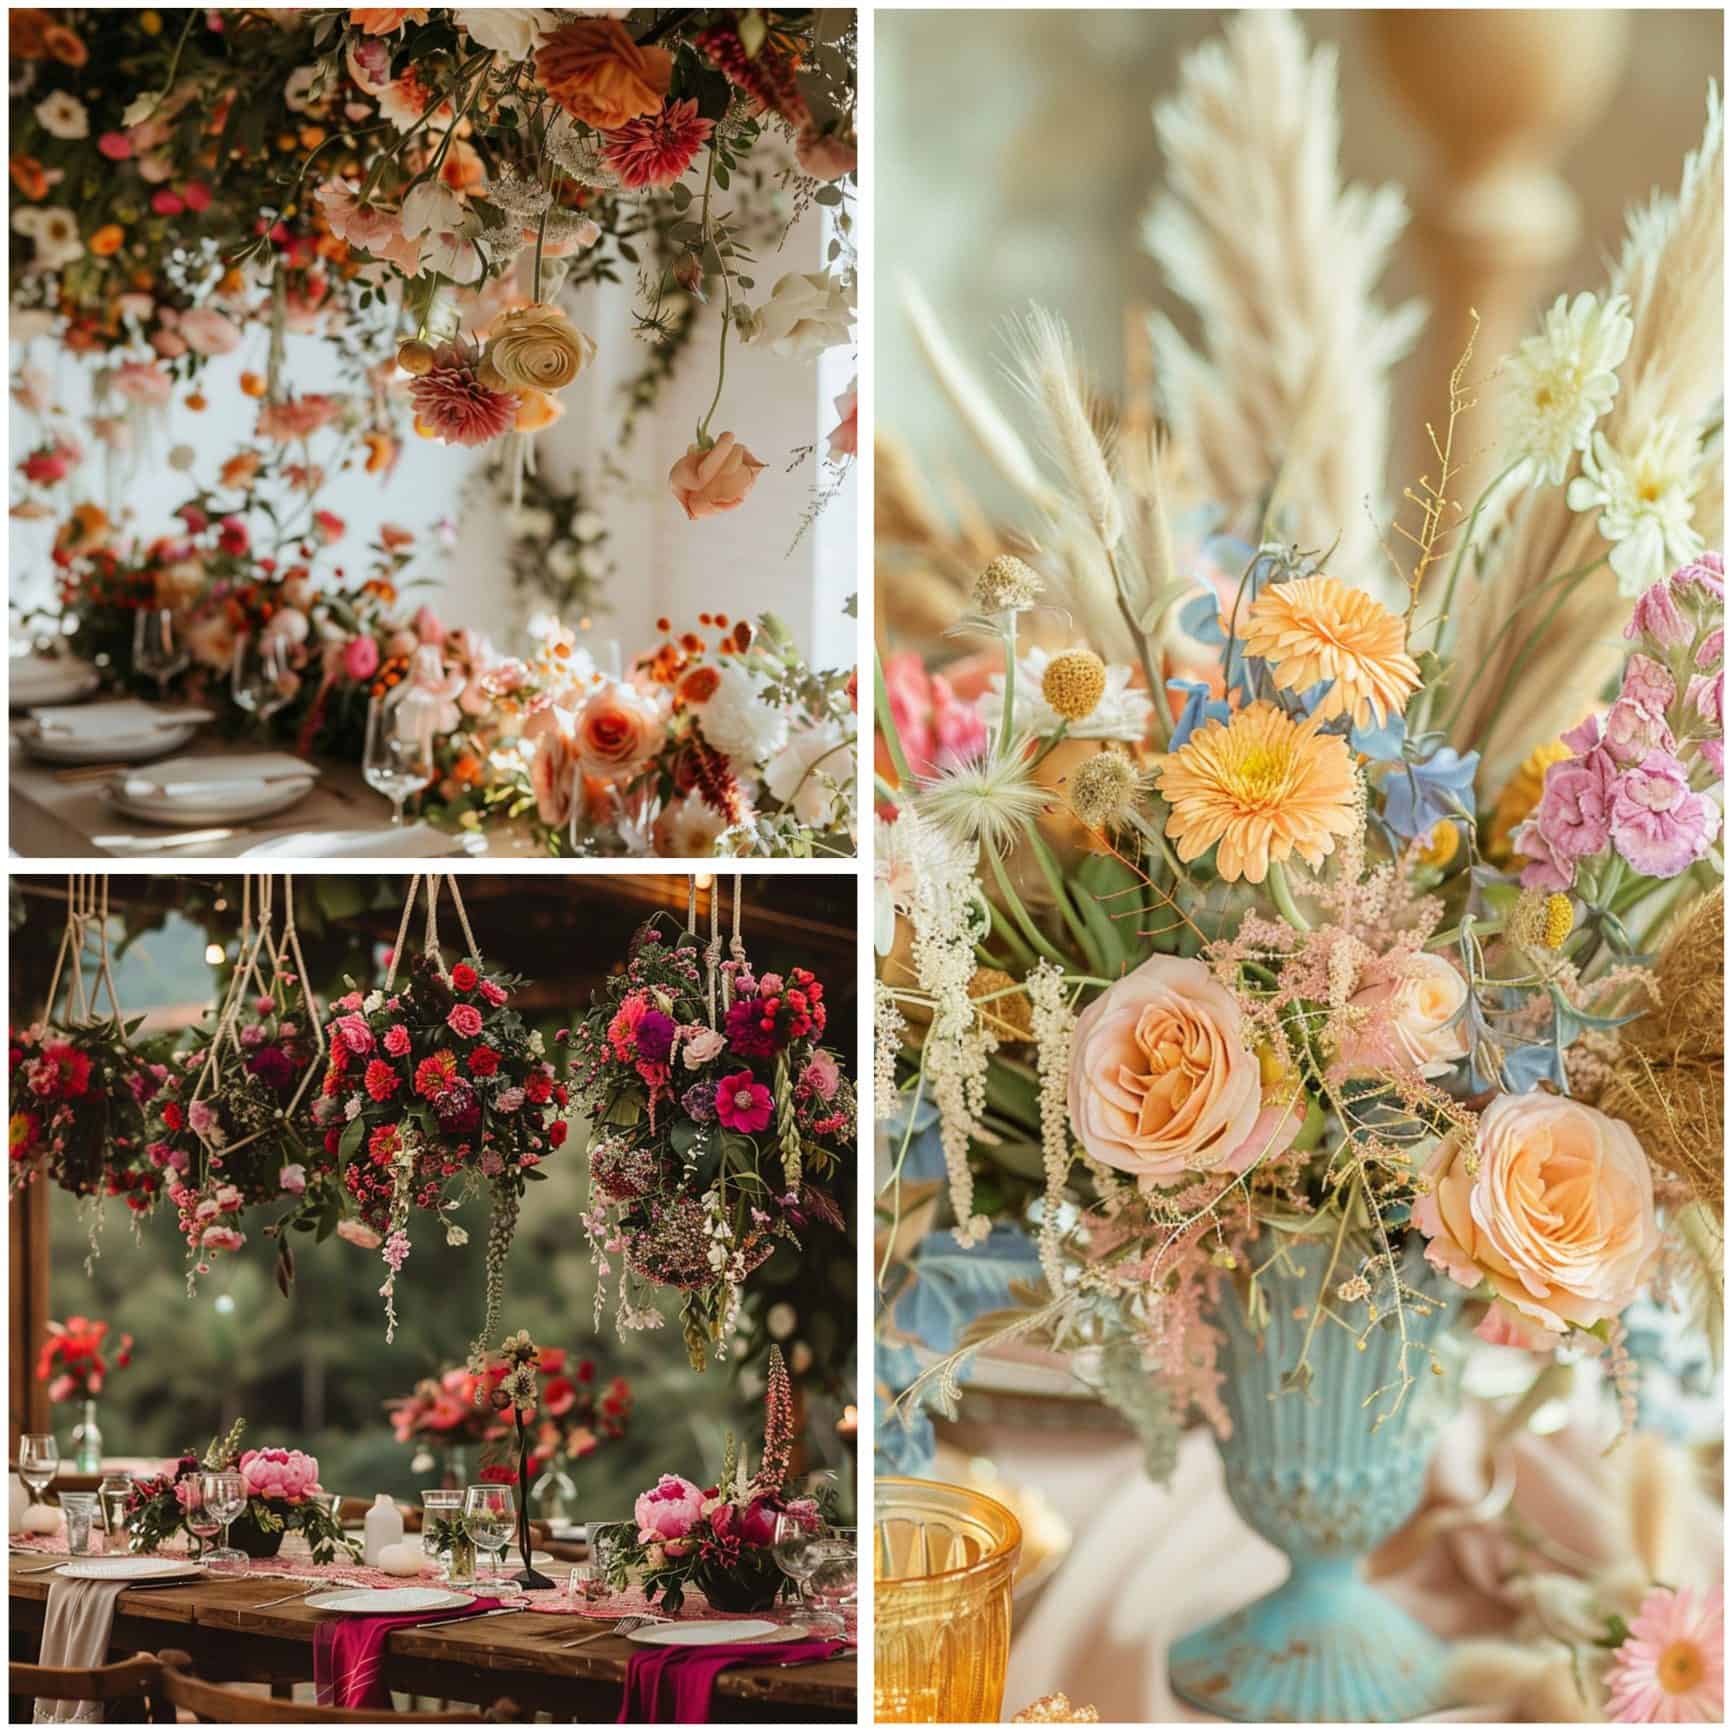 whimsical floral arrangements for a boho wedding